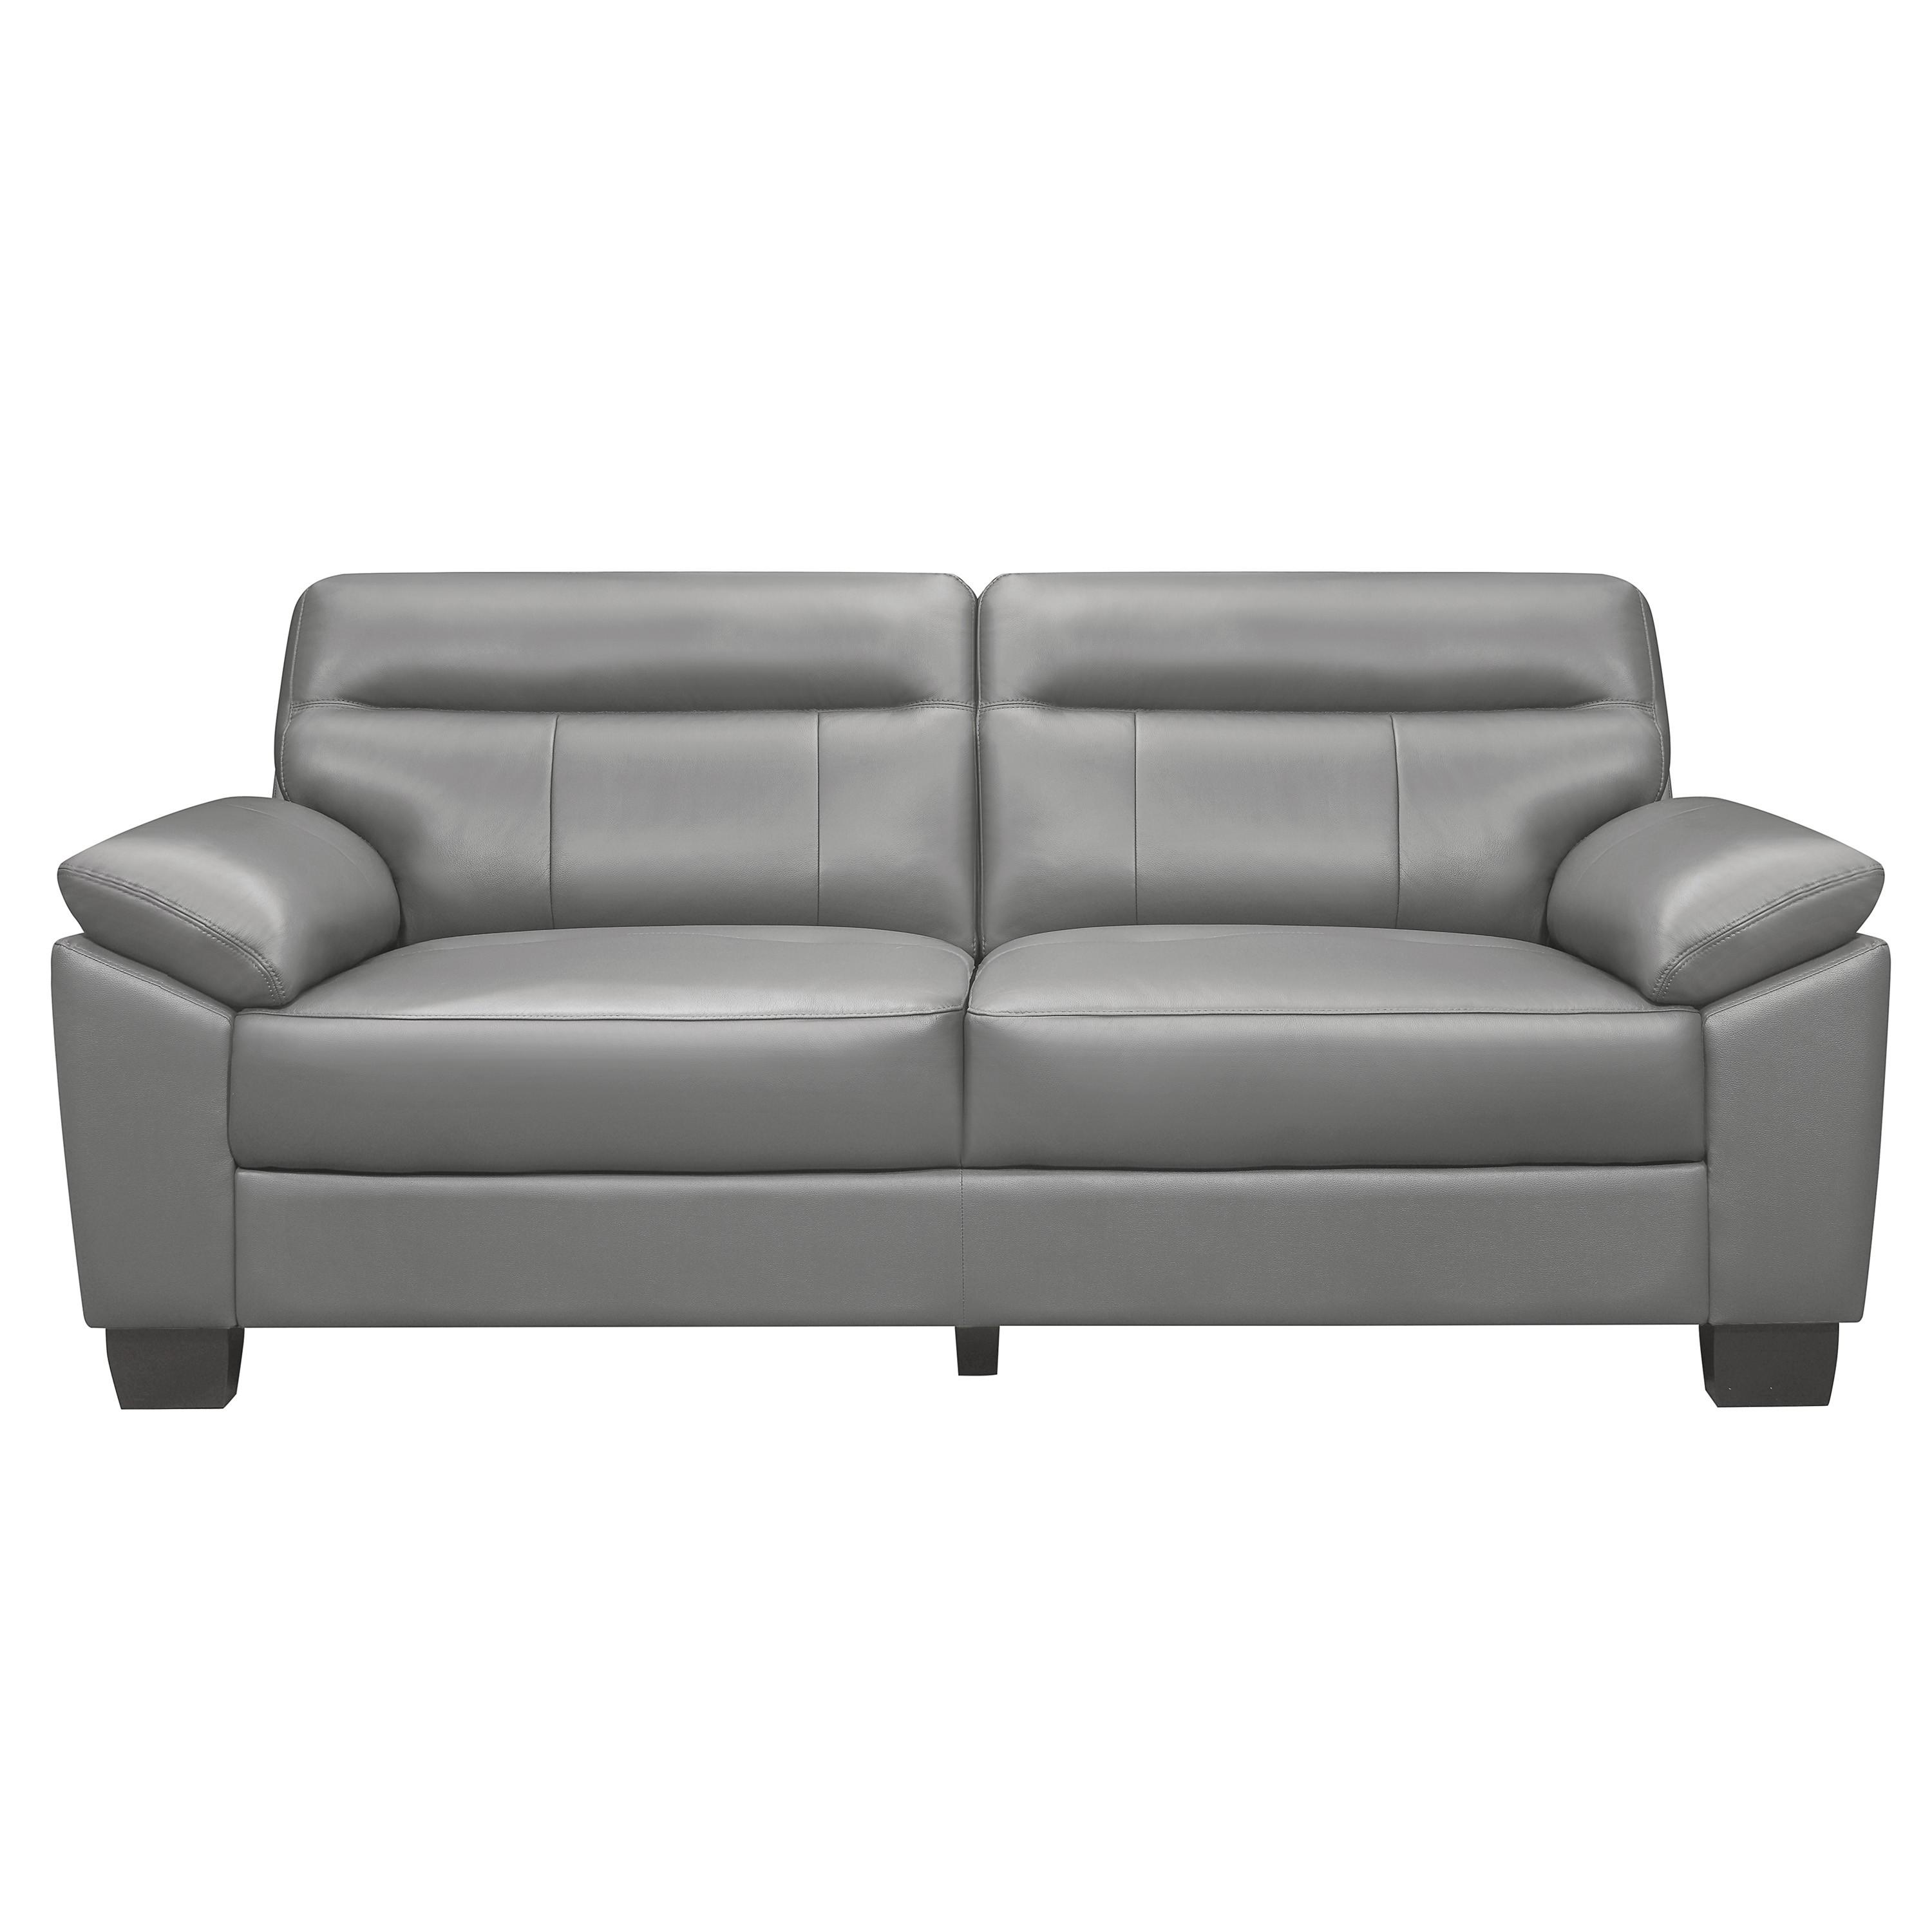 Modern Sofa 9537GRY-3 Denizen 9537GRY-3 in Gray Leather